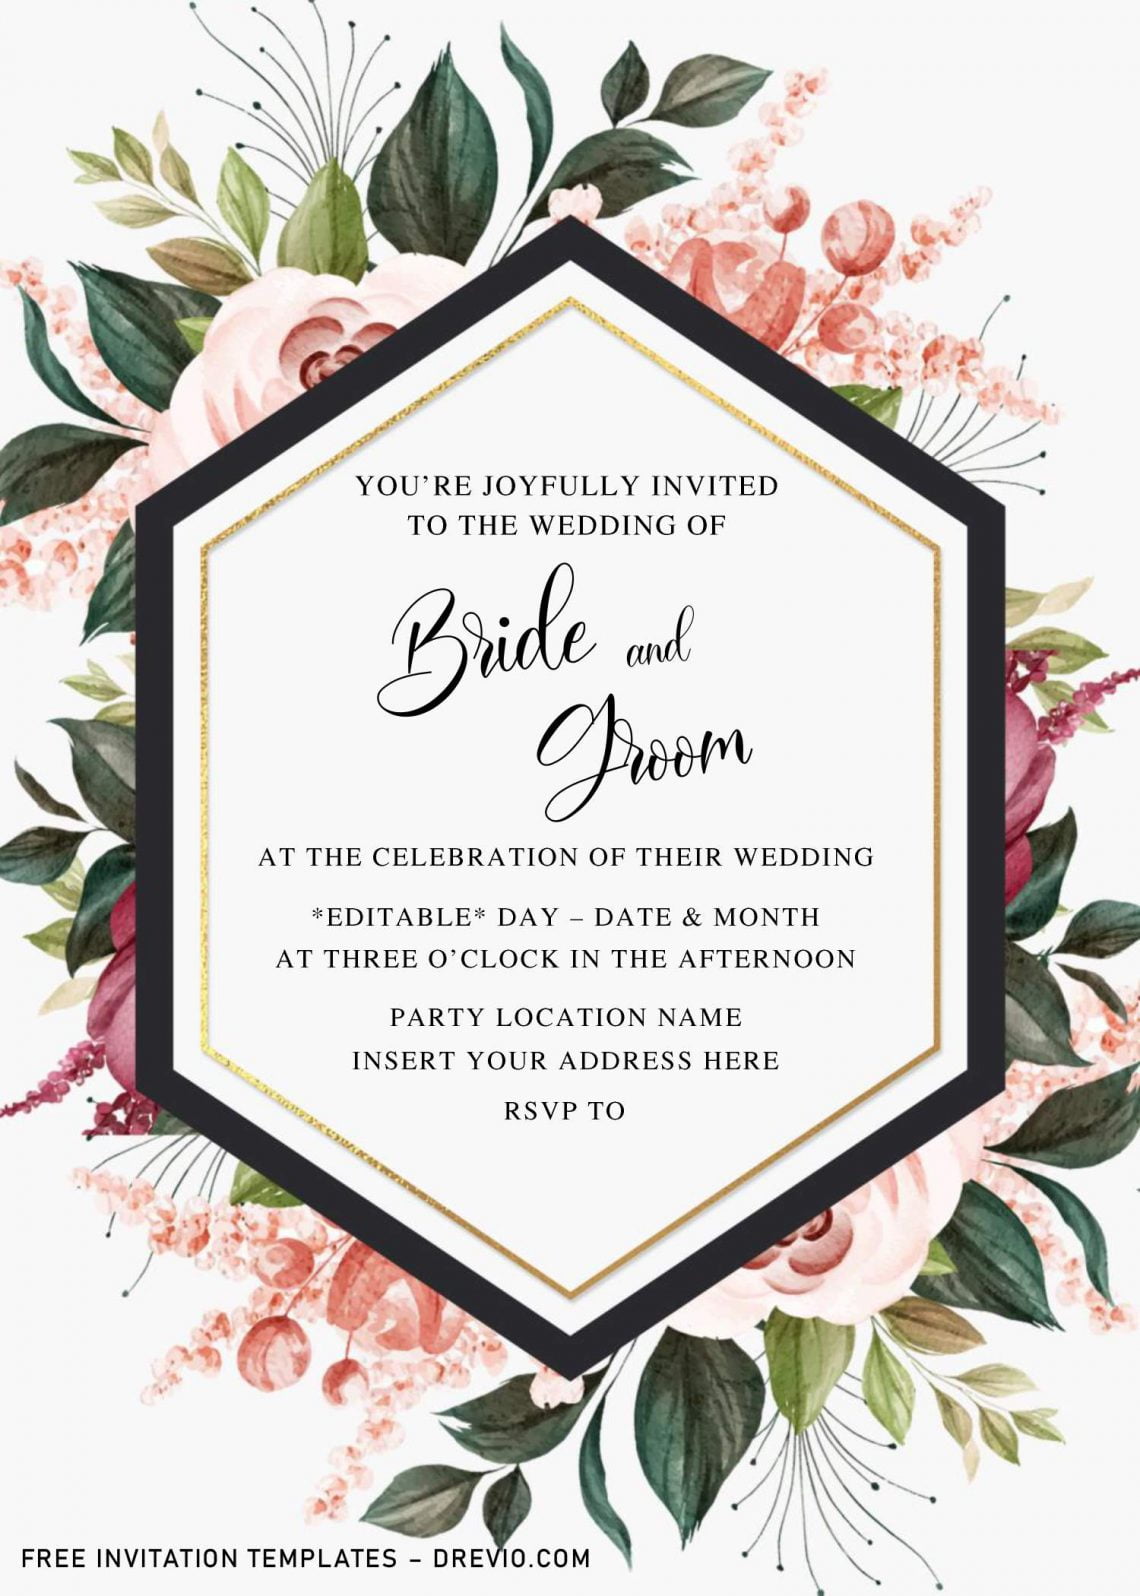 wedding-invitation-free-downloadable-templates-bikegai